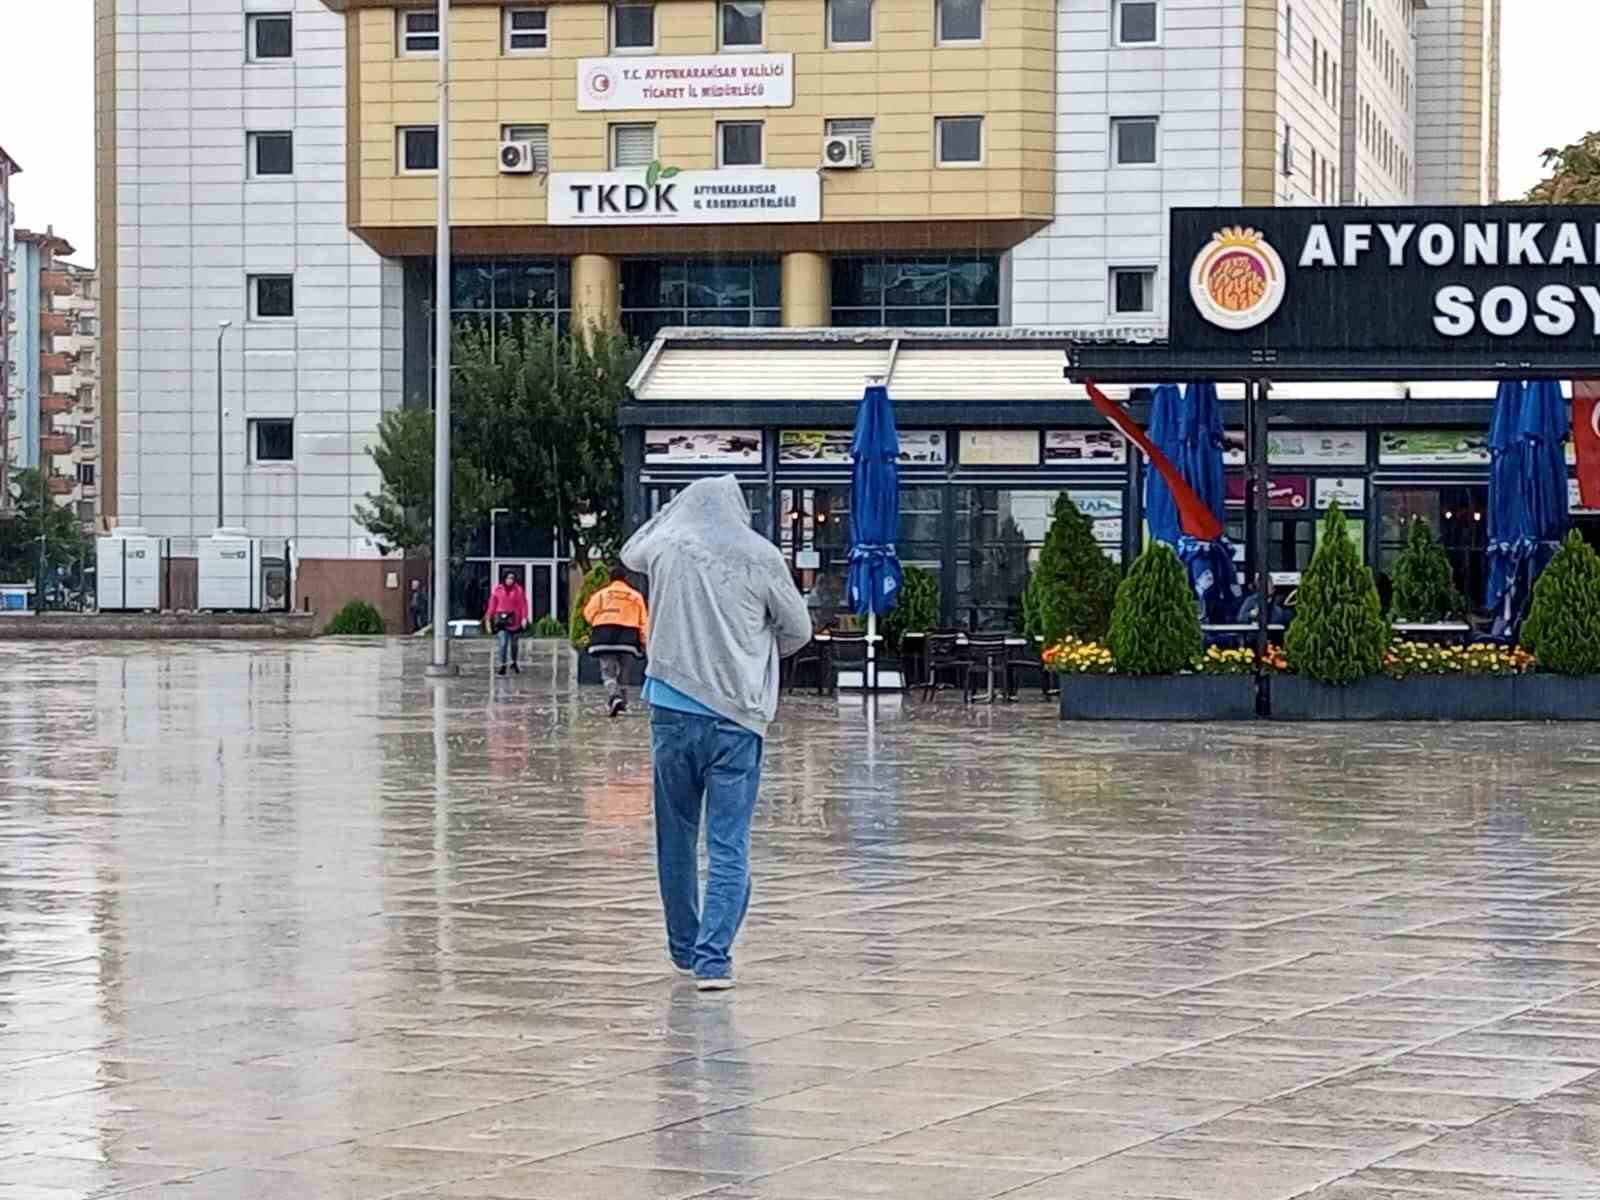 Afyonkarahisar’da yağmur yağışı